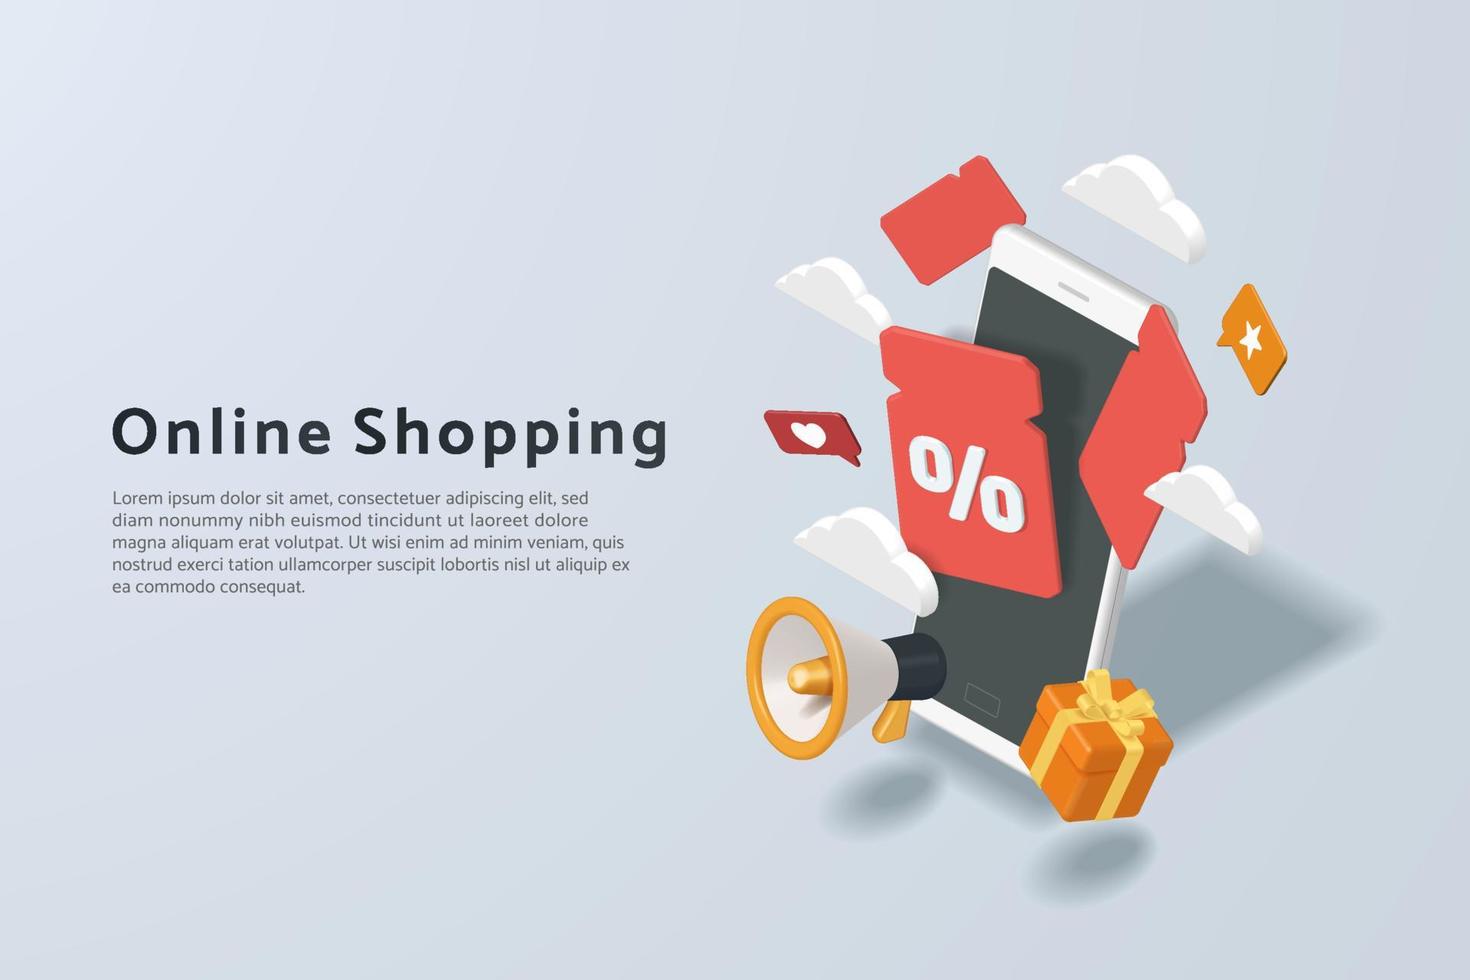 Online shopping via smartphone, discount coupon vector